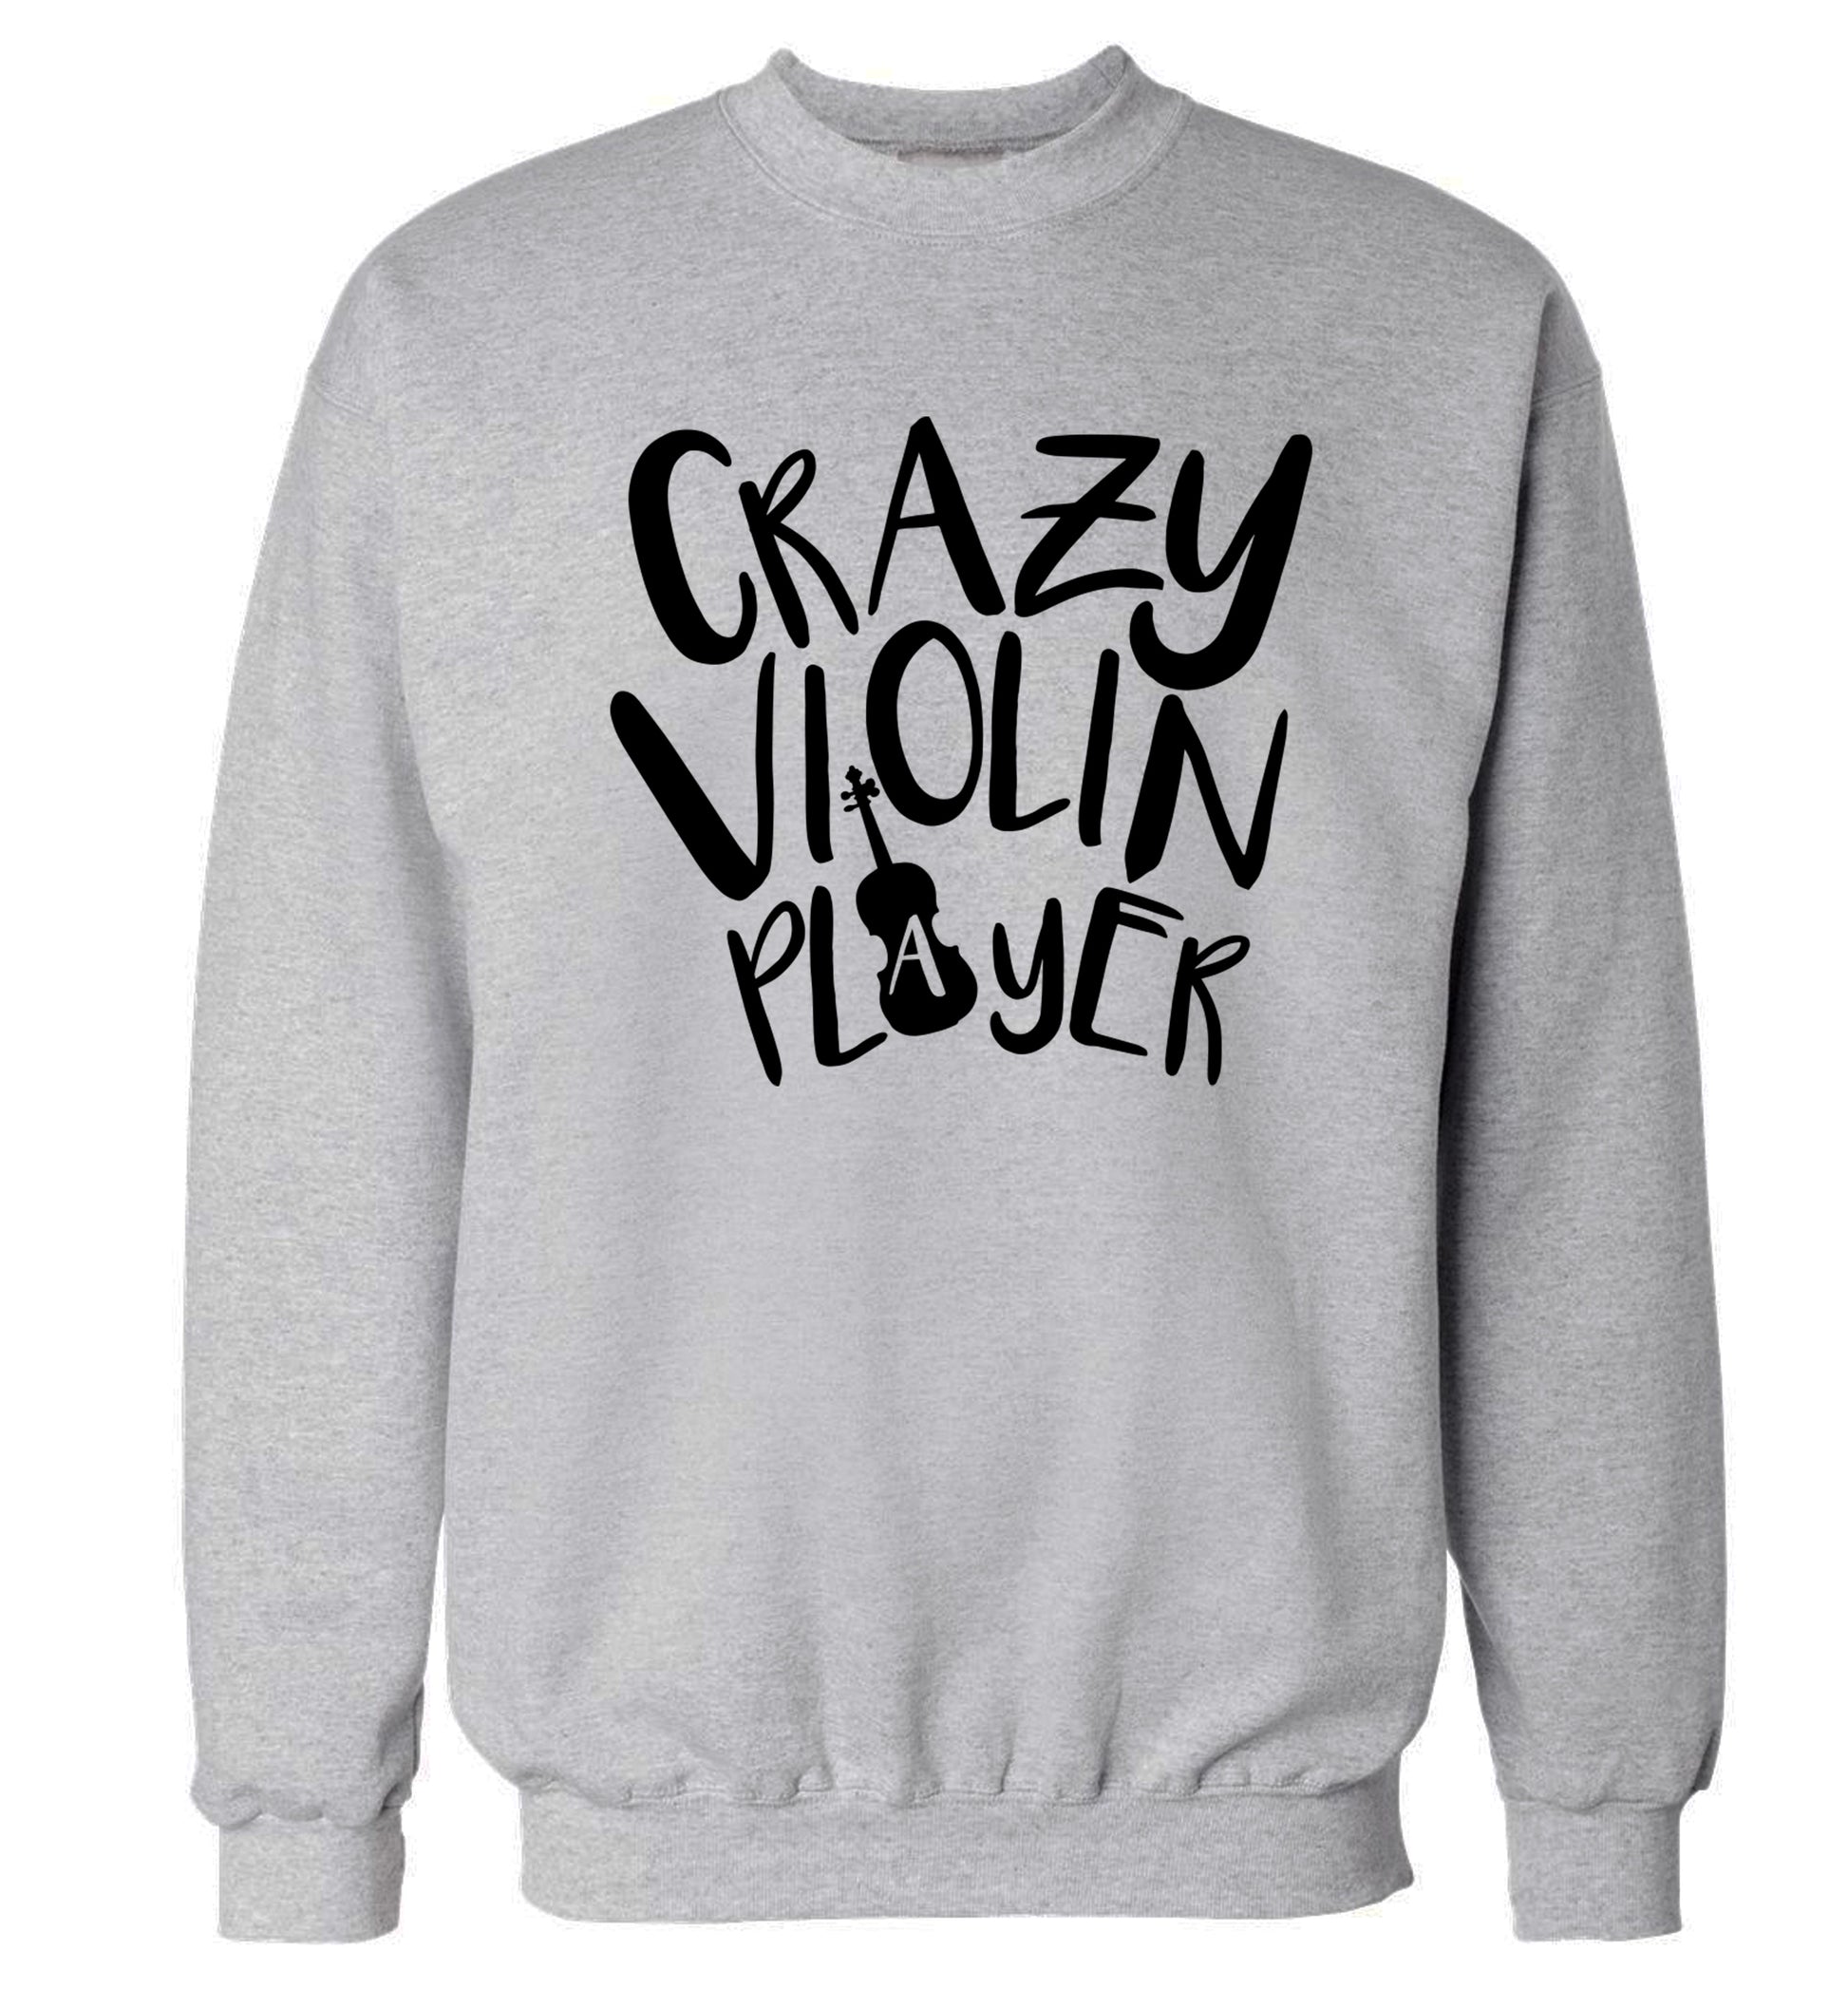 Crazy Violin Player Adult's unisex grey Sweater 2XL